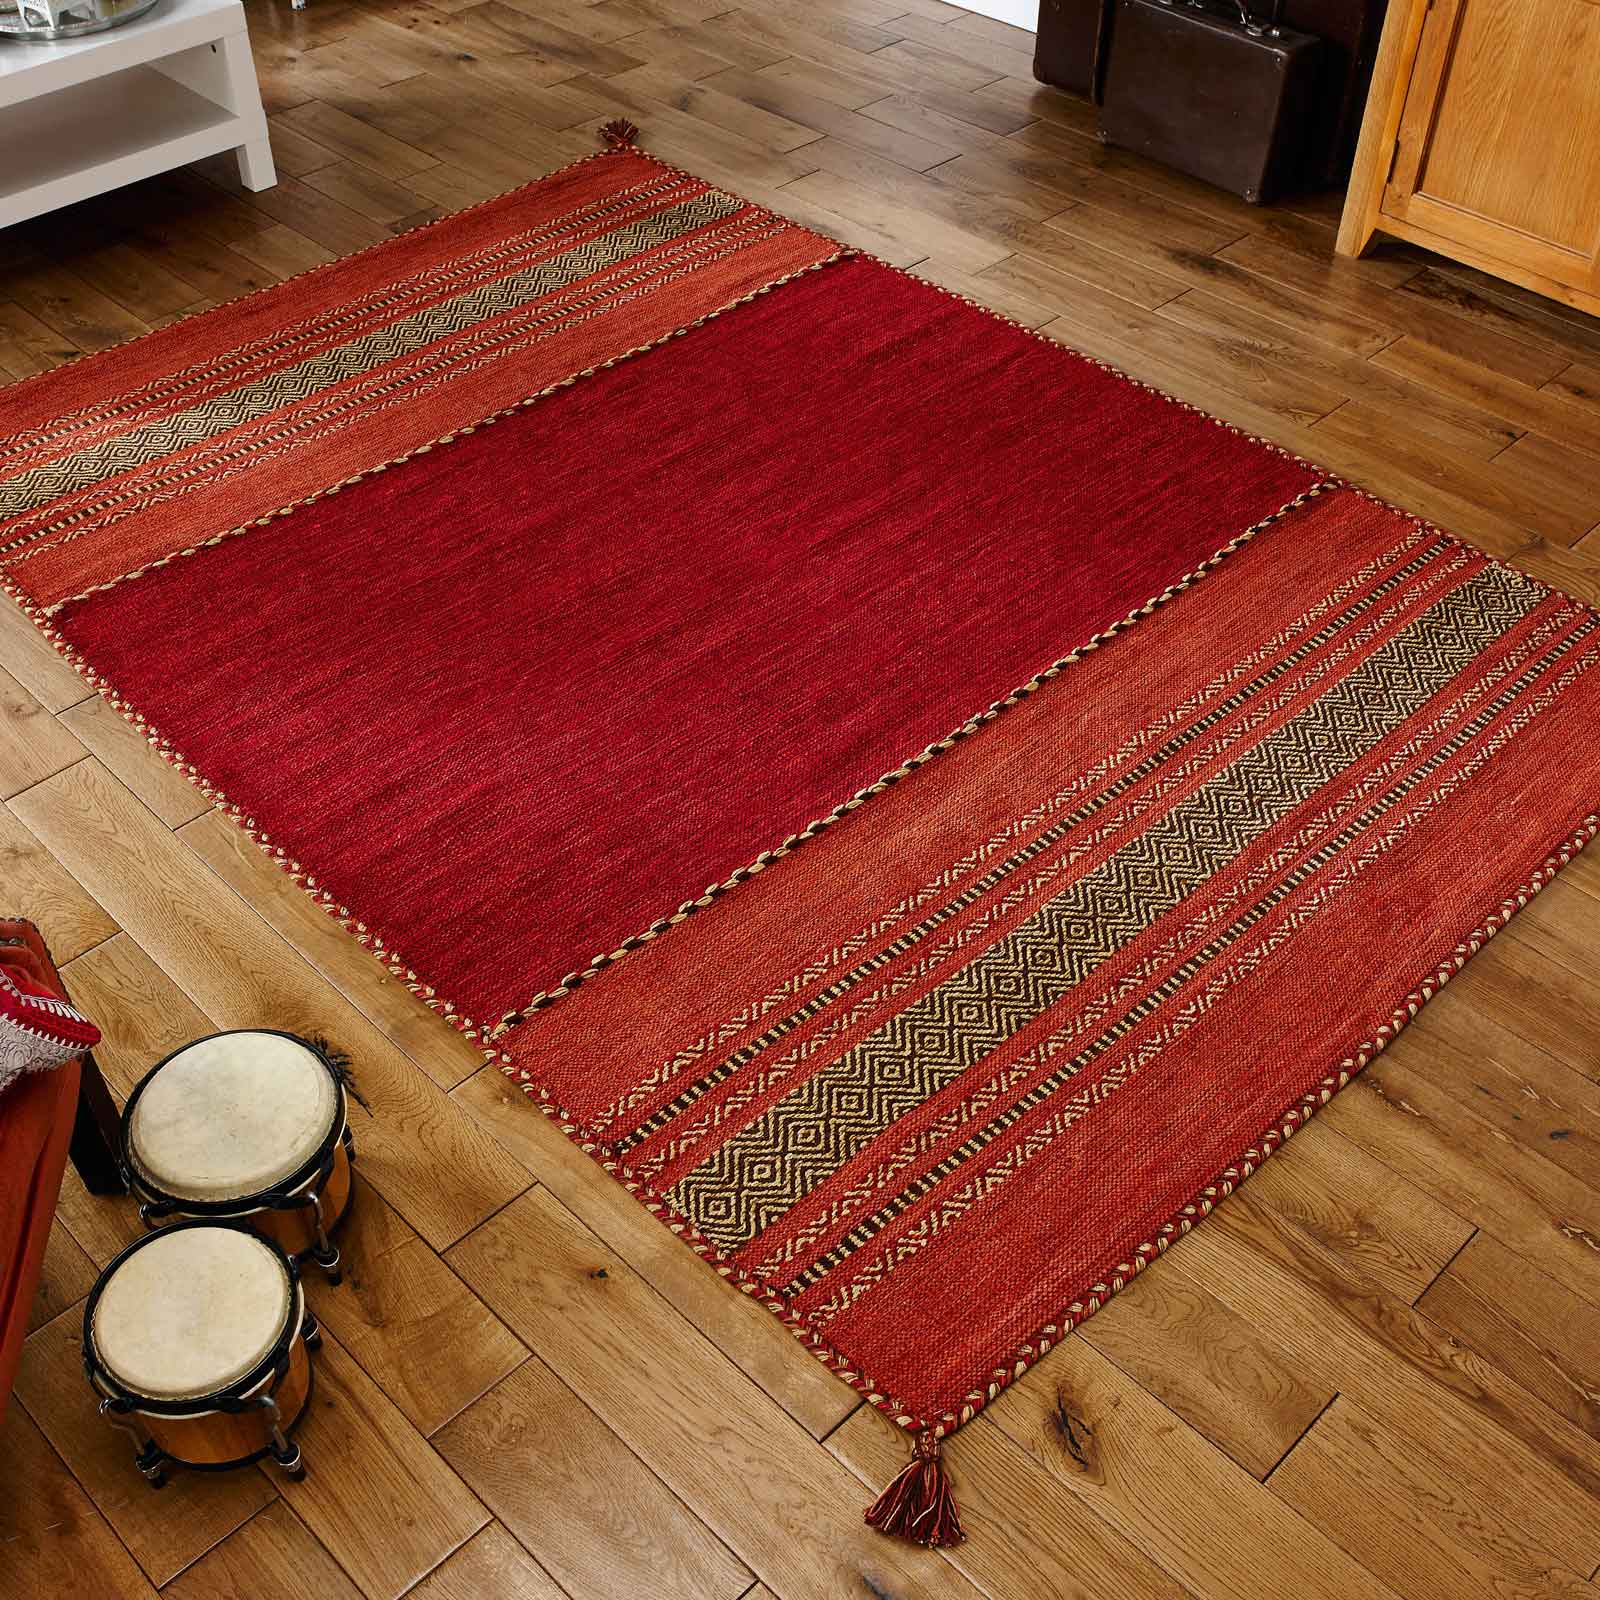 red kilim rug on wooden floor